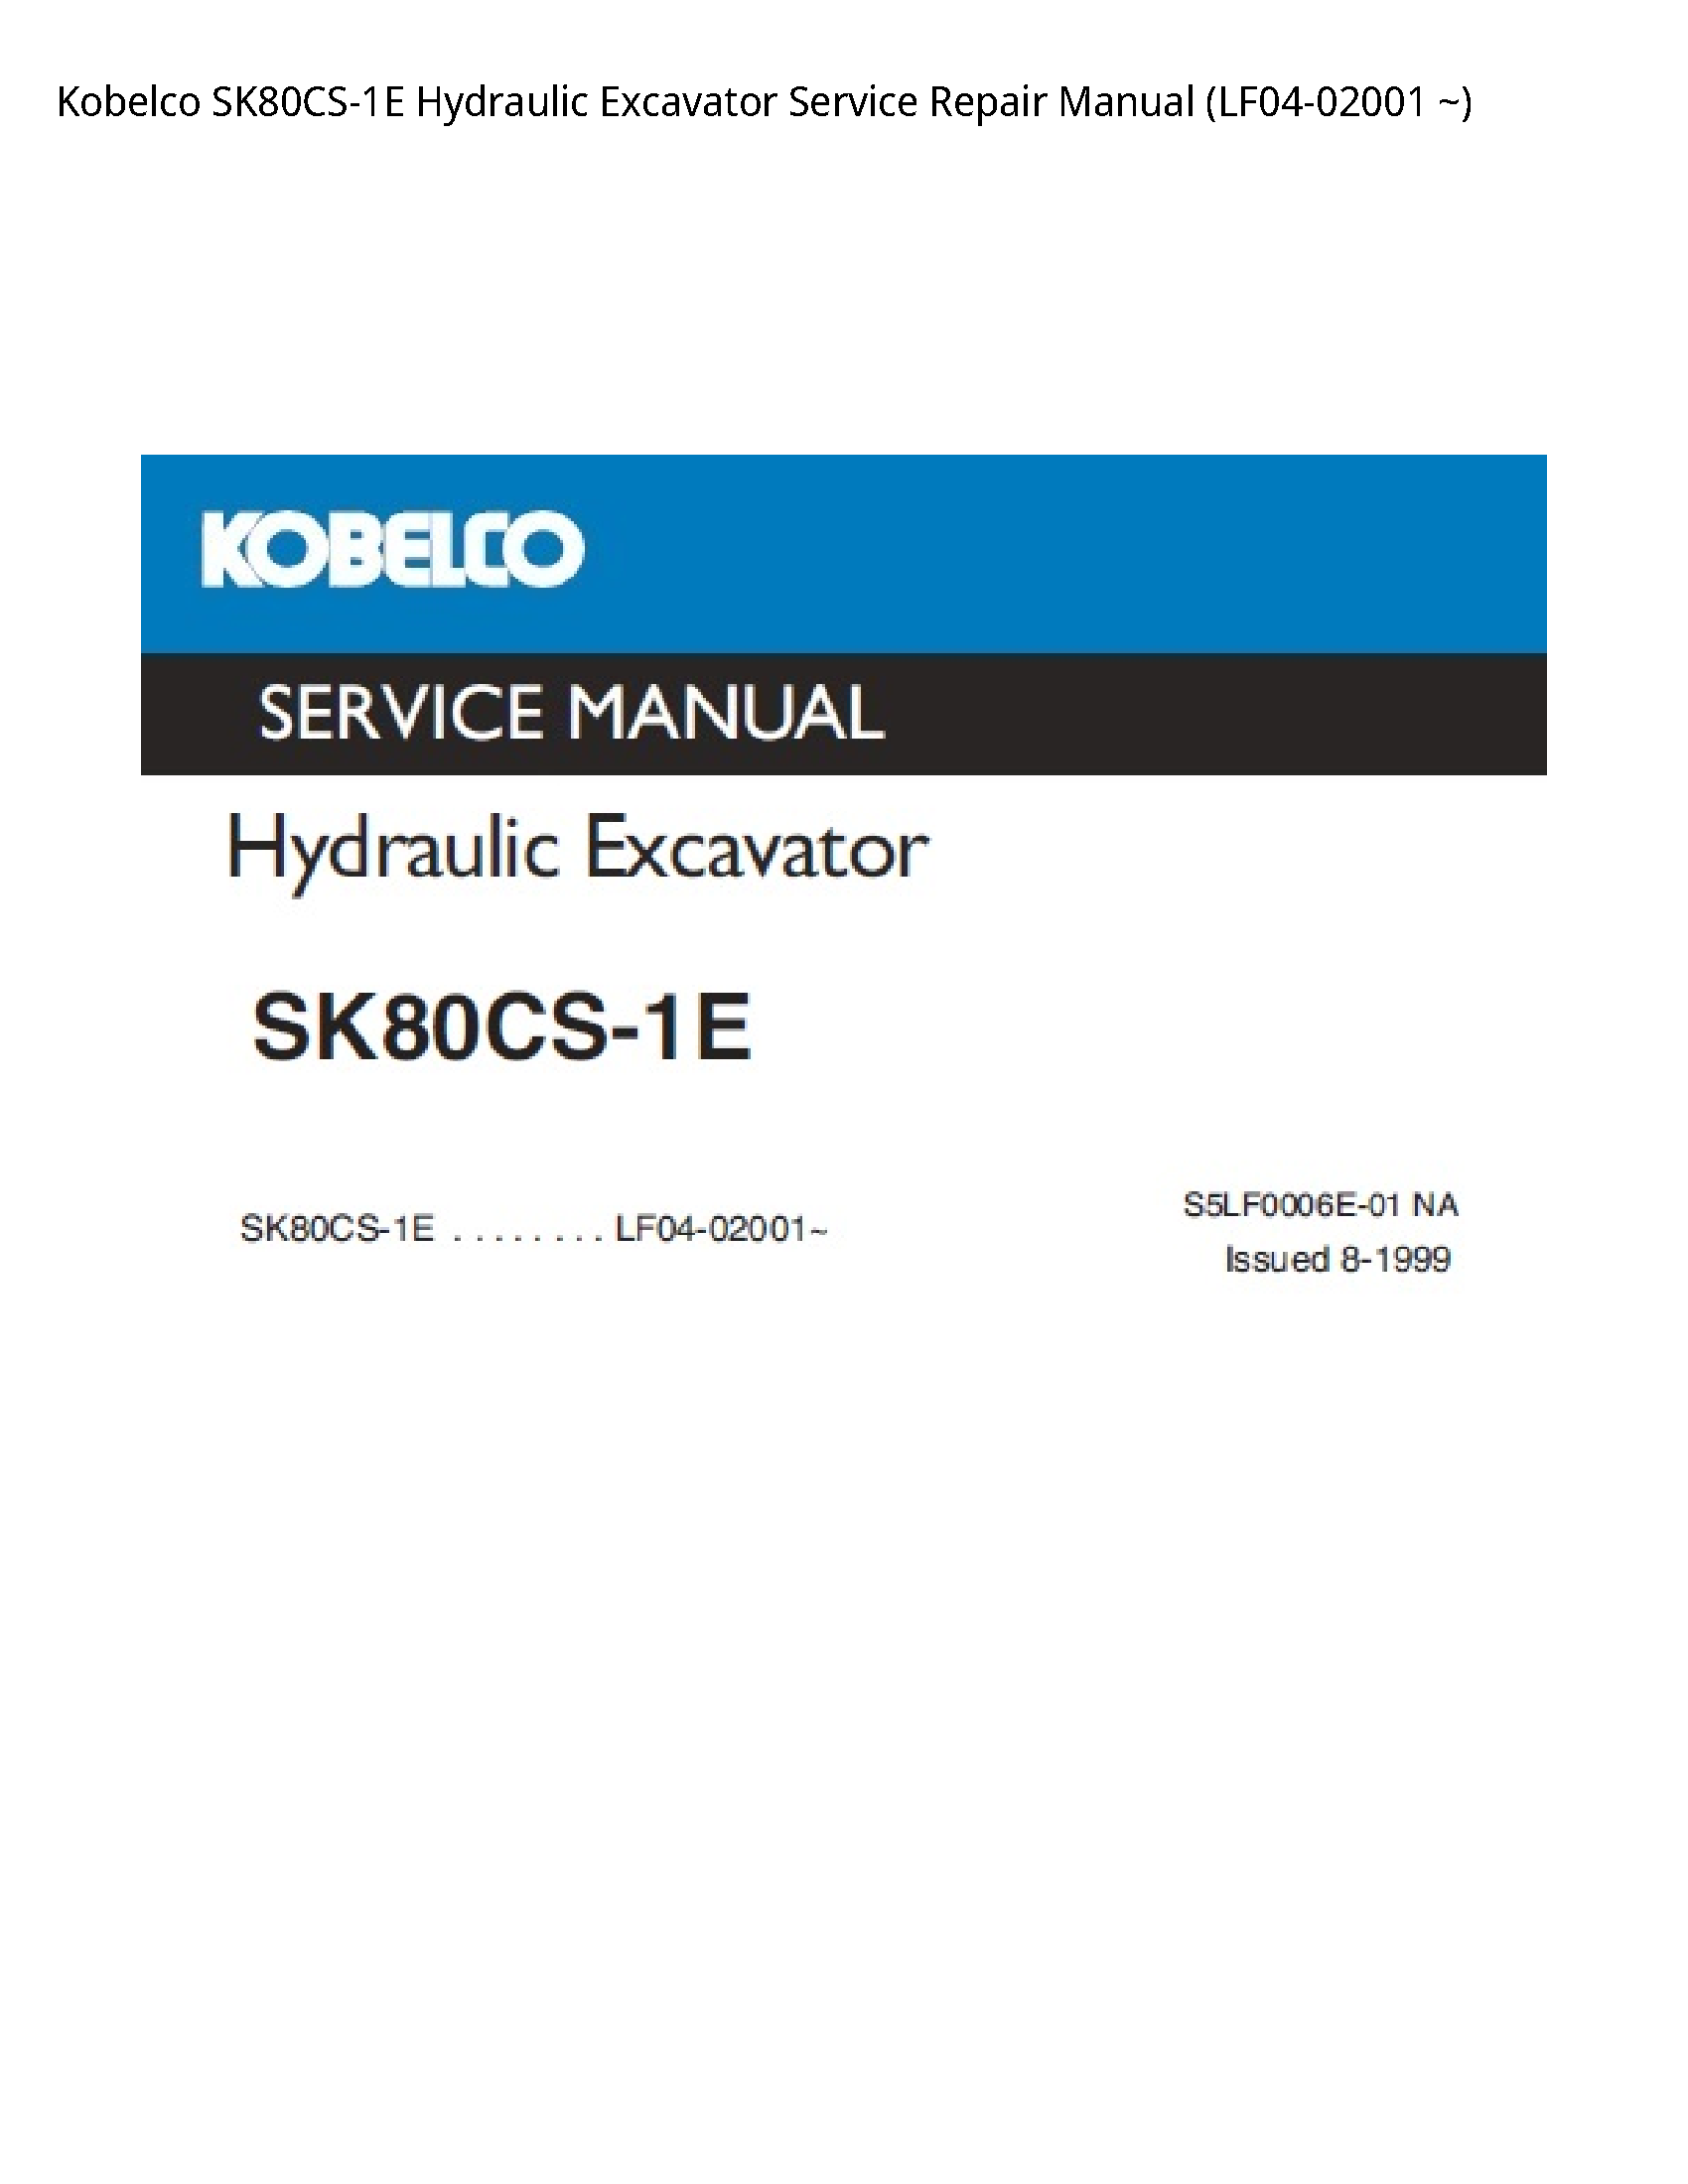 Kobelco SK80CS-1E Hydraulic Excavator manual